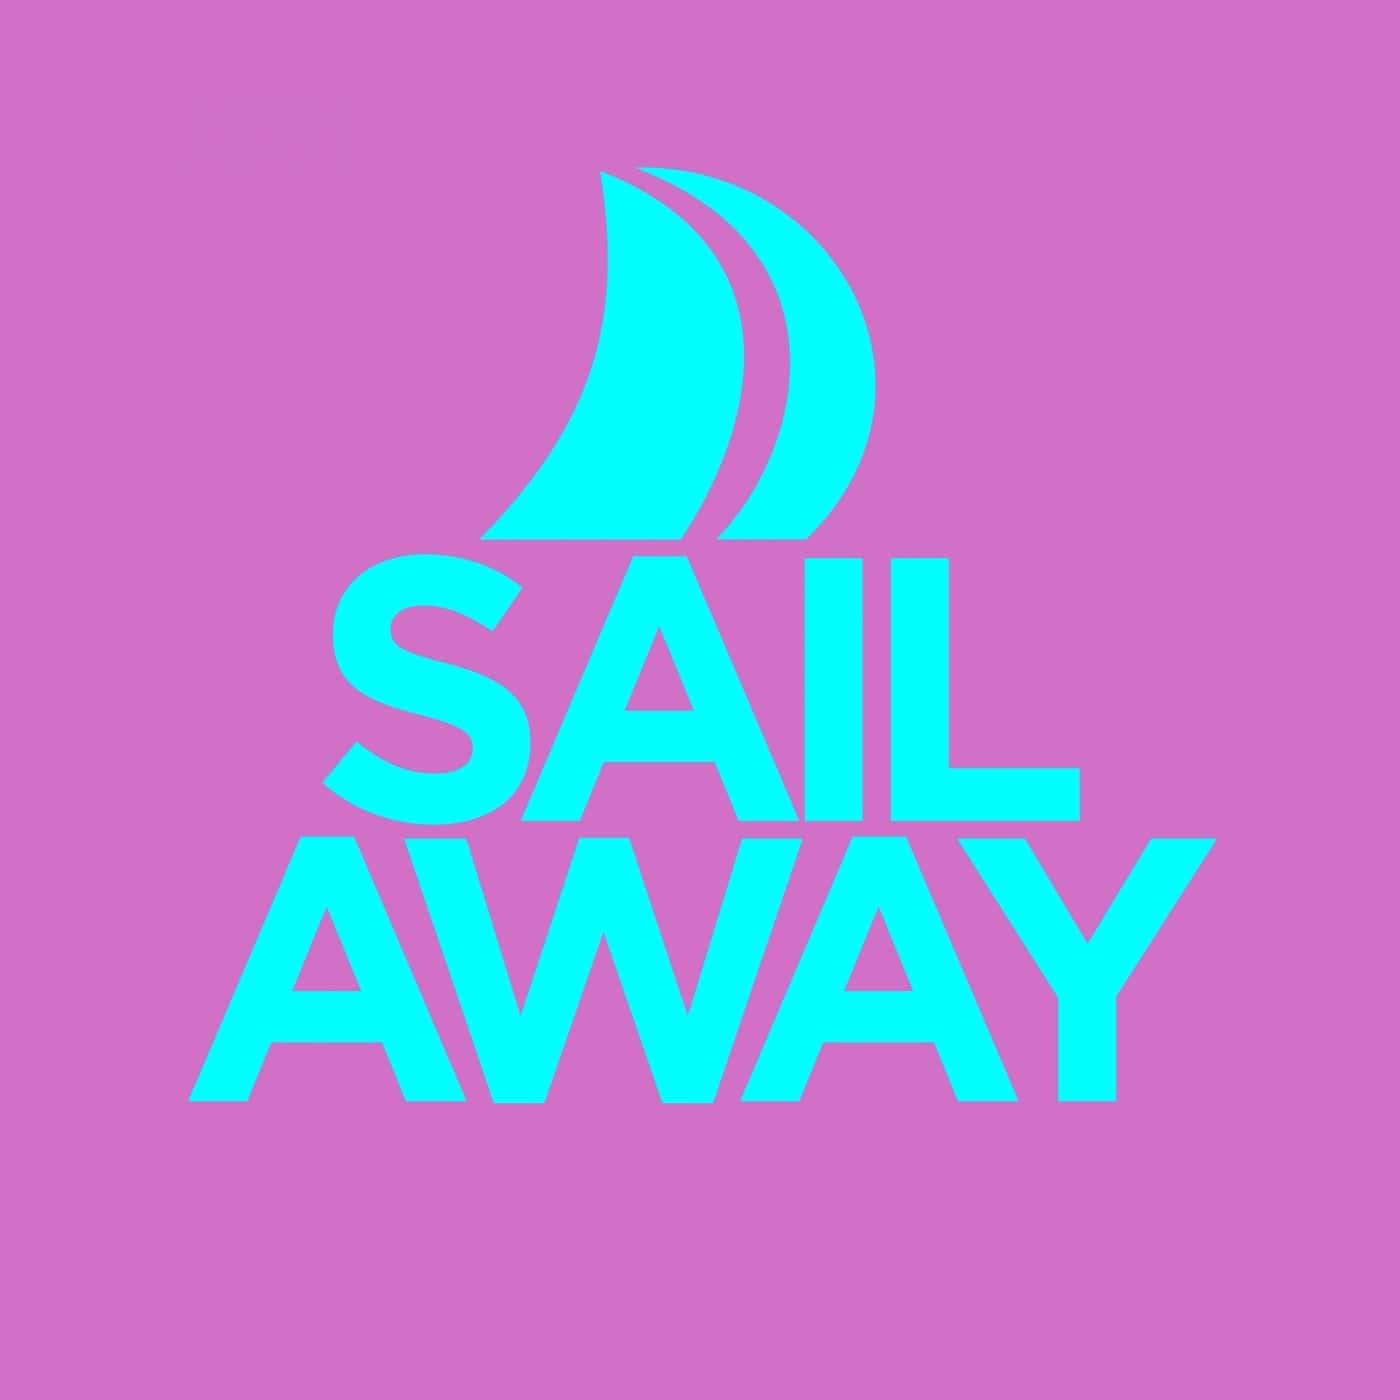 Download Sail Away on Electrobuzz